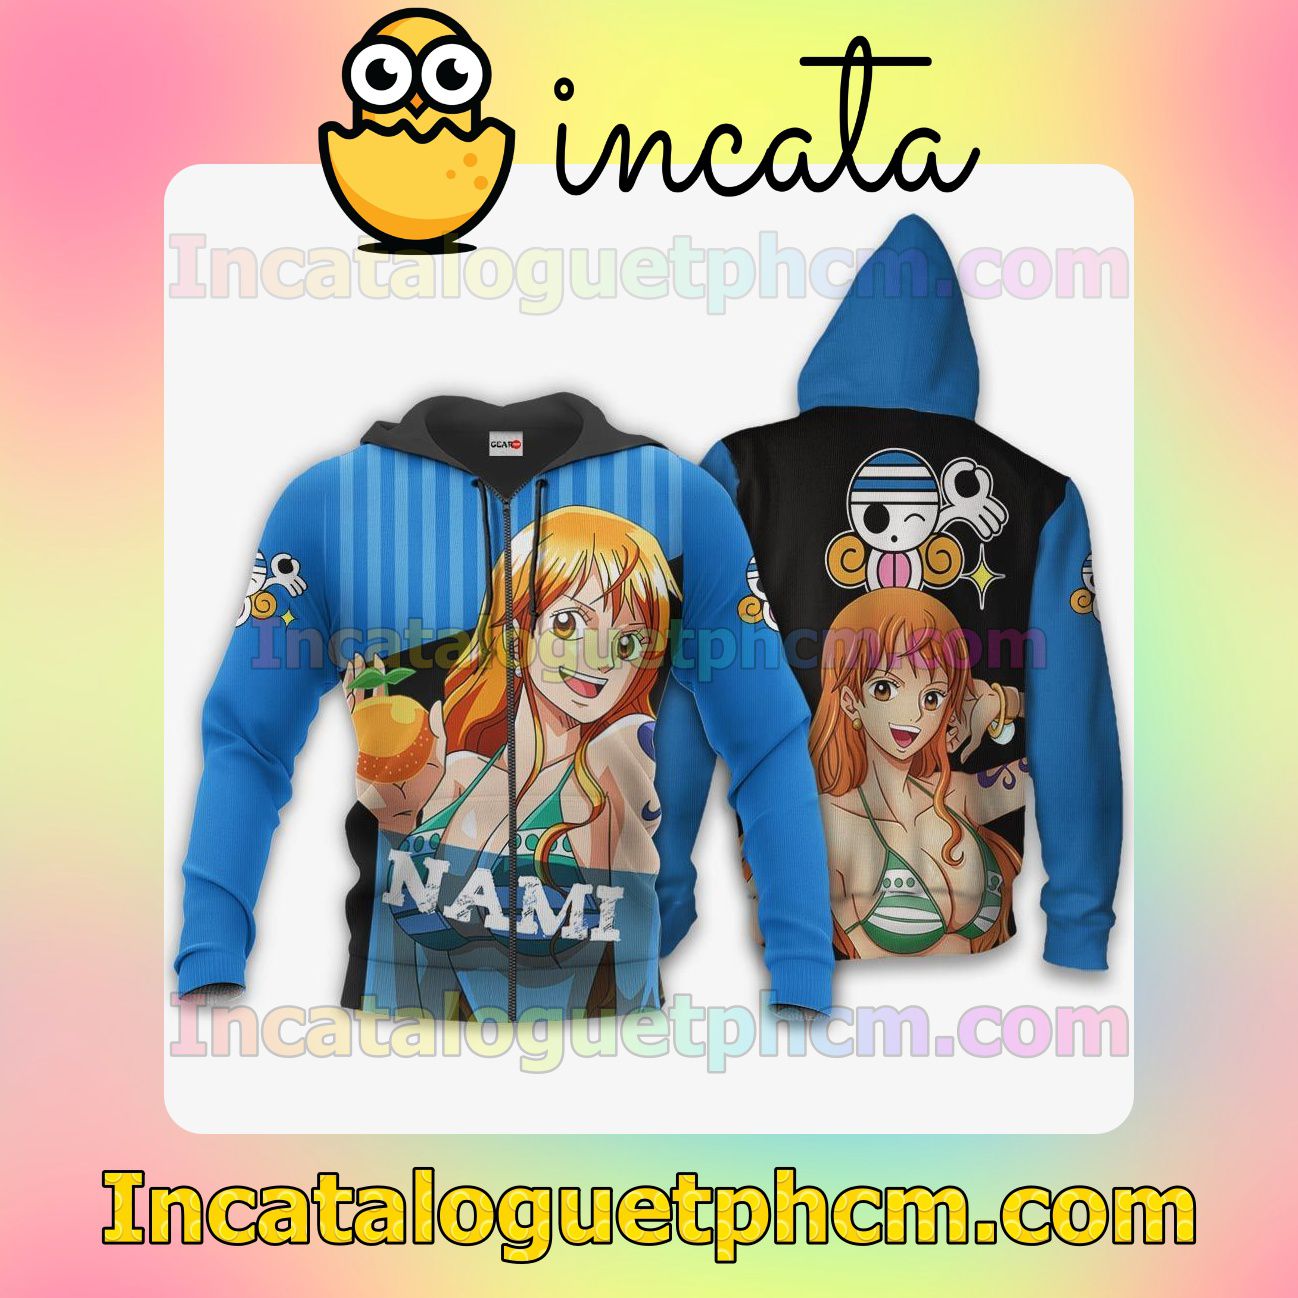 Nami Cat Burglar One Piece Anime Clothing Merch Zip Hoodie Jacket Shirts